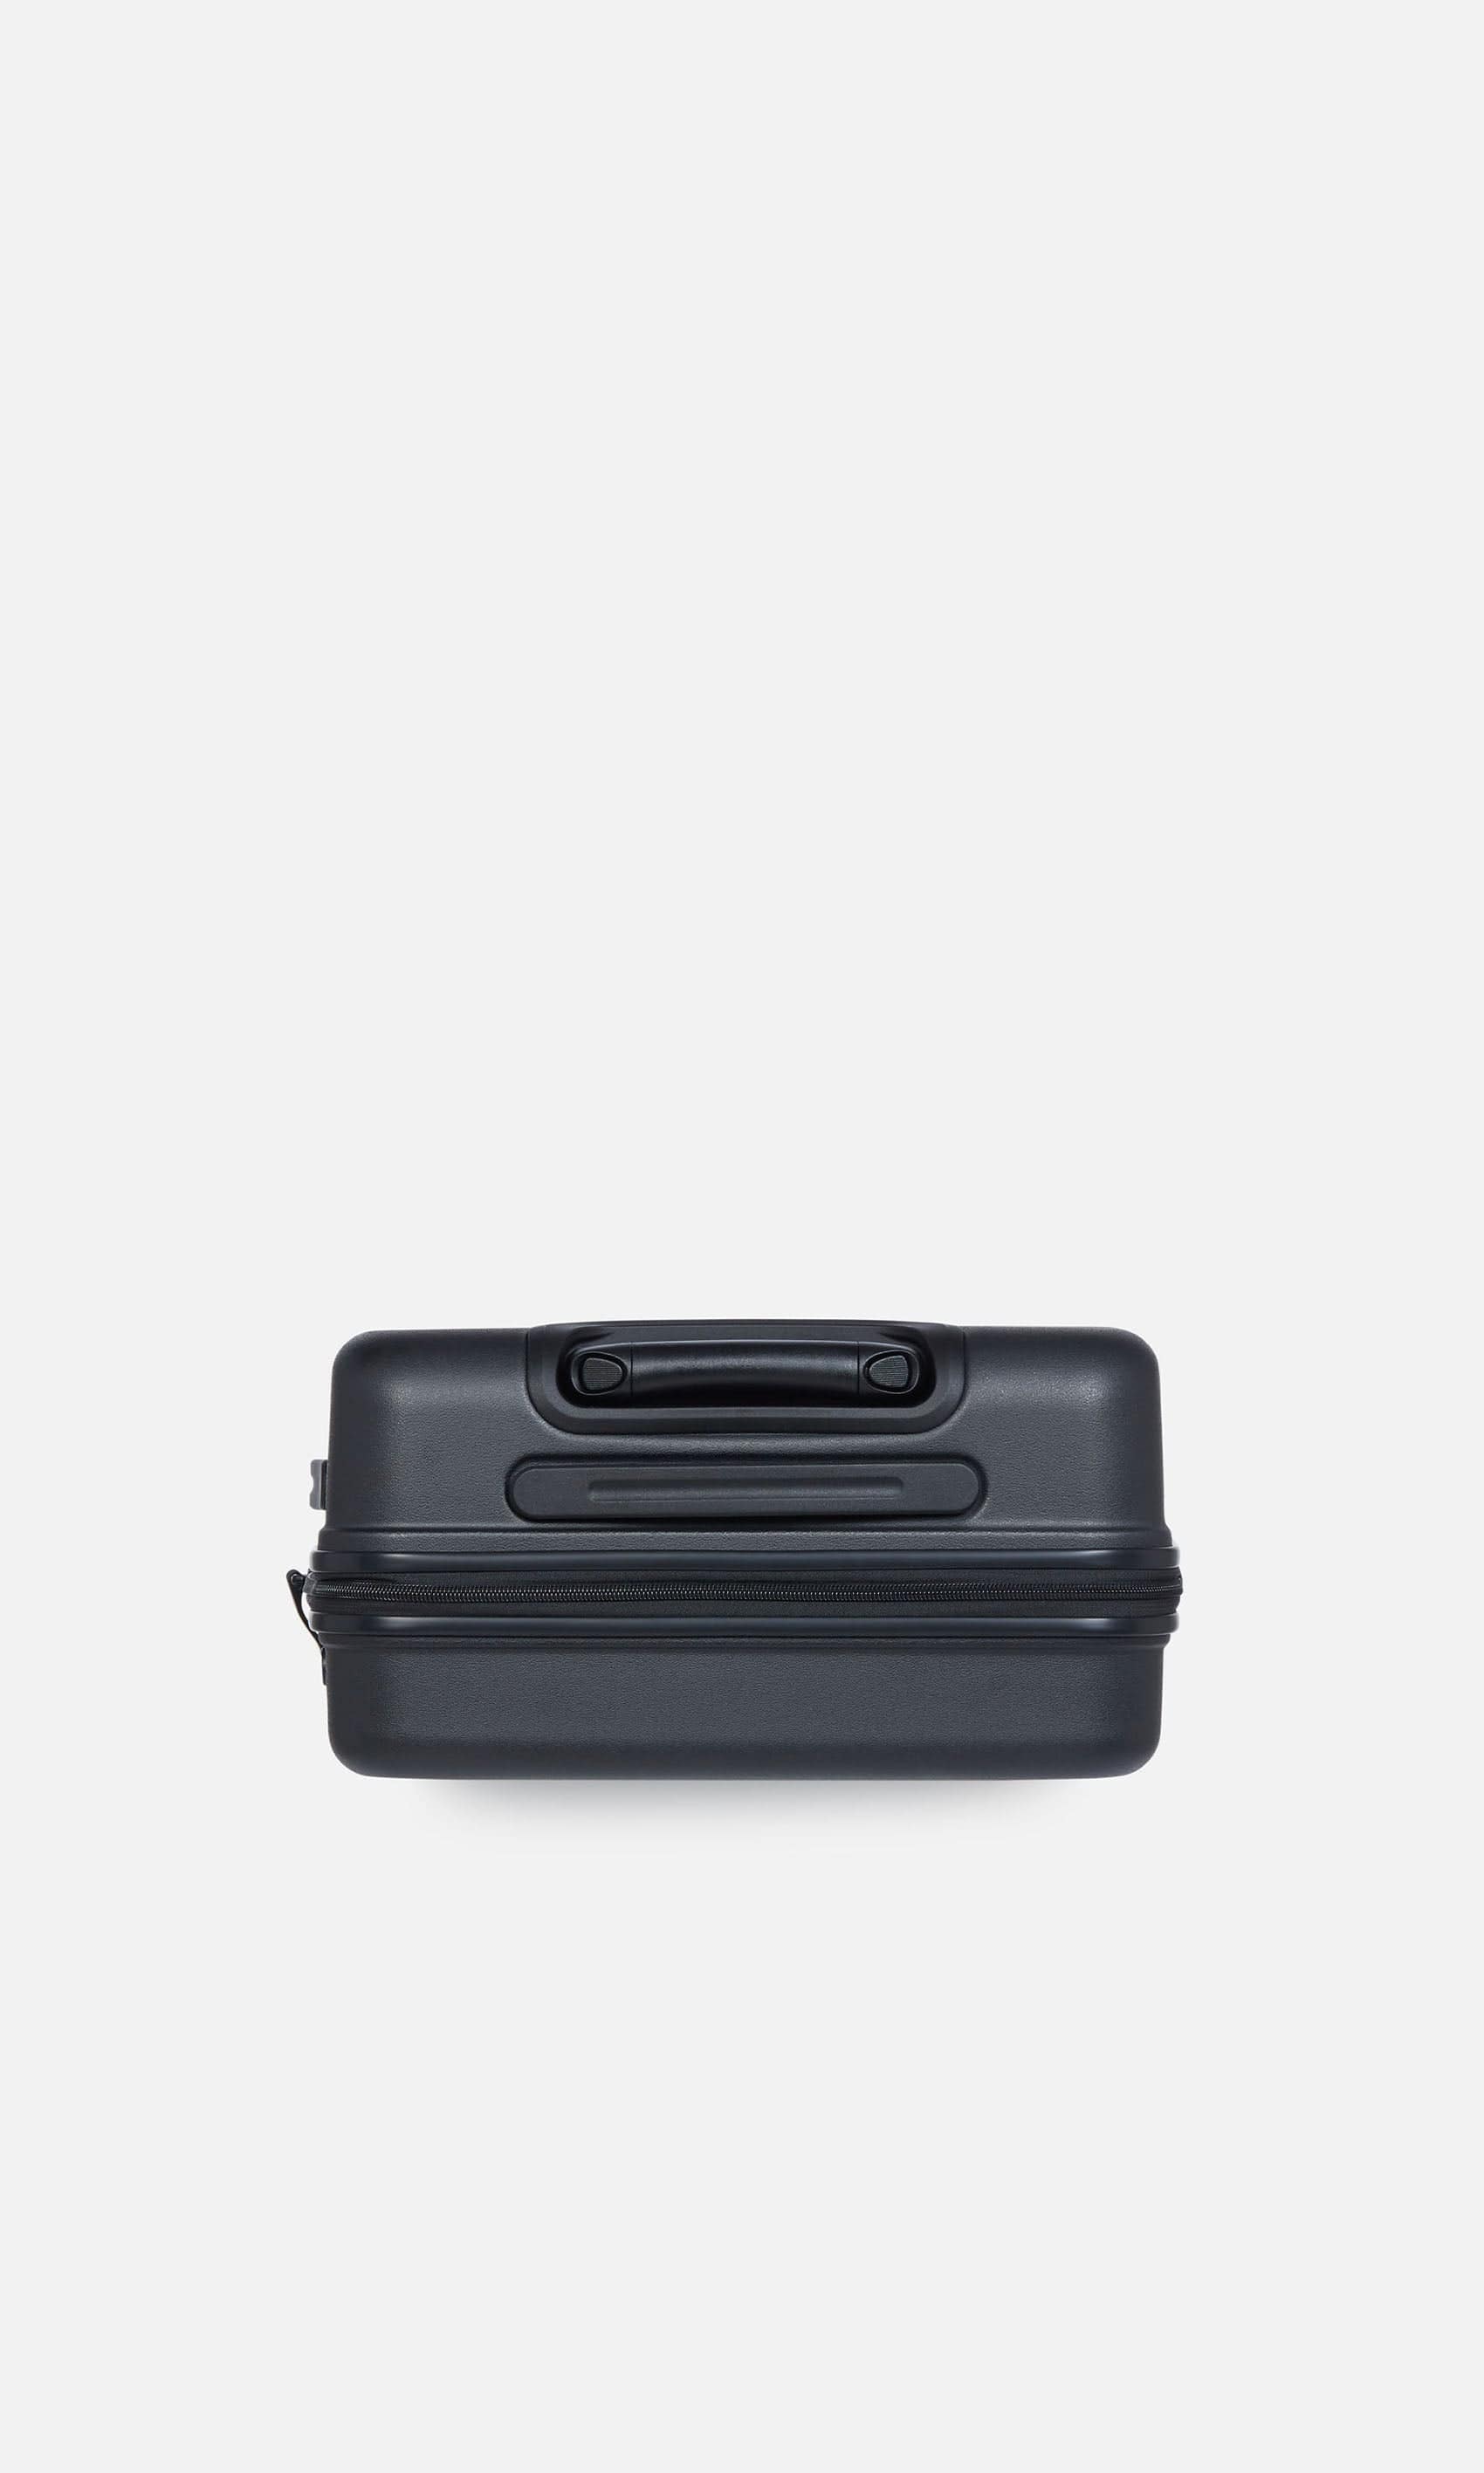 Clifton Cabin Suitcase 55x40x20cm Black | Hard Suitcase | Antler UK